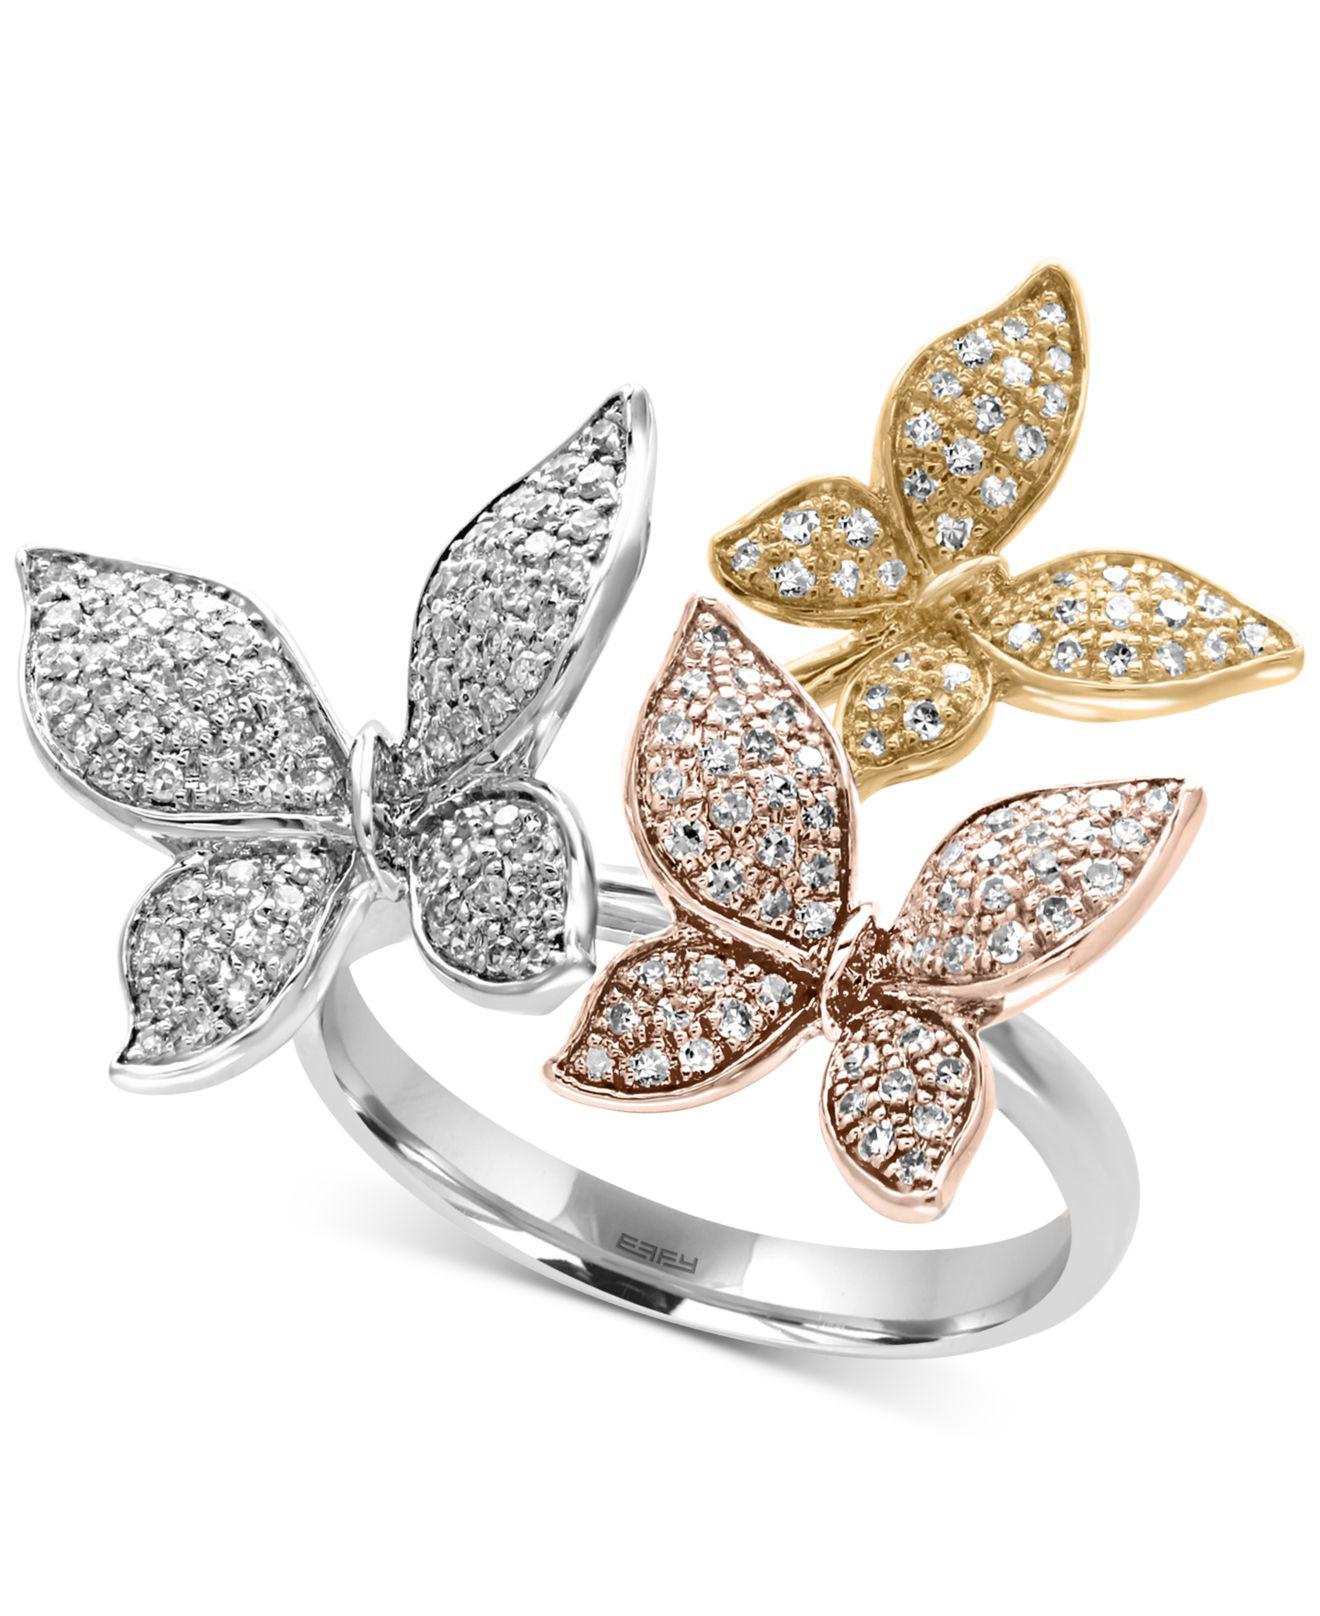 Золотое кольцо бабочка. Роберто Браво бабочки. Кольцо бабочка золото. Серьги бабочки с бриллиантами. Кольцо с бабочкой золотое.